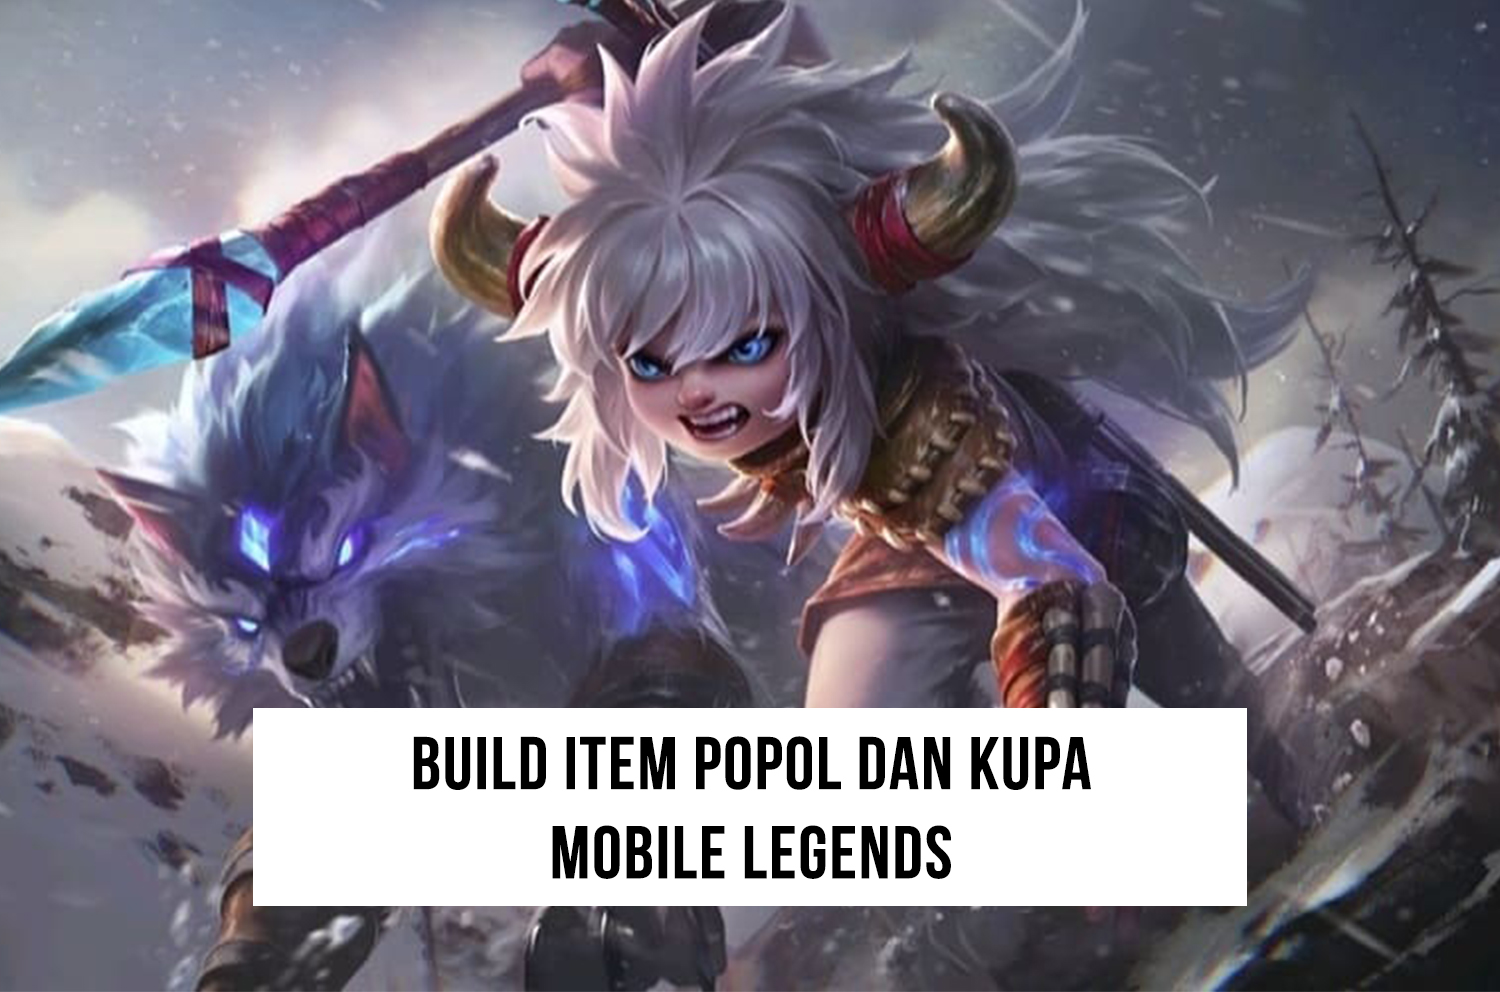 Build Item Popol dan Kupa Tersakit 2020 Mobile Legends » TeknoGeng.id